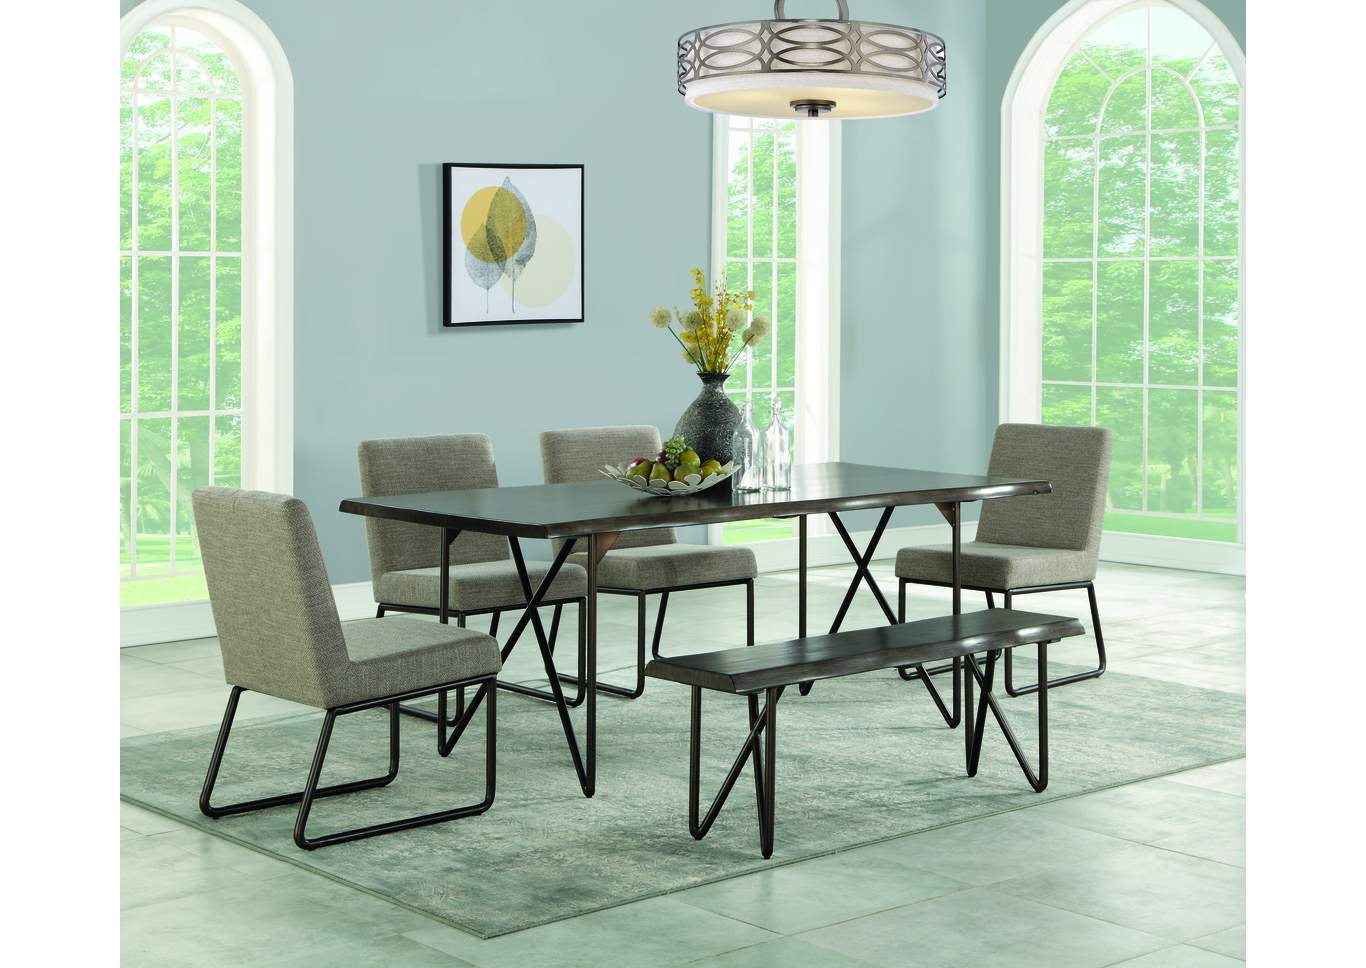 Shadow Tan & Distressed Grey 6 Piece Dining Set W/ 4 Chairs, Bench,Flexsteel